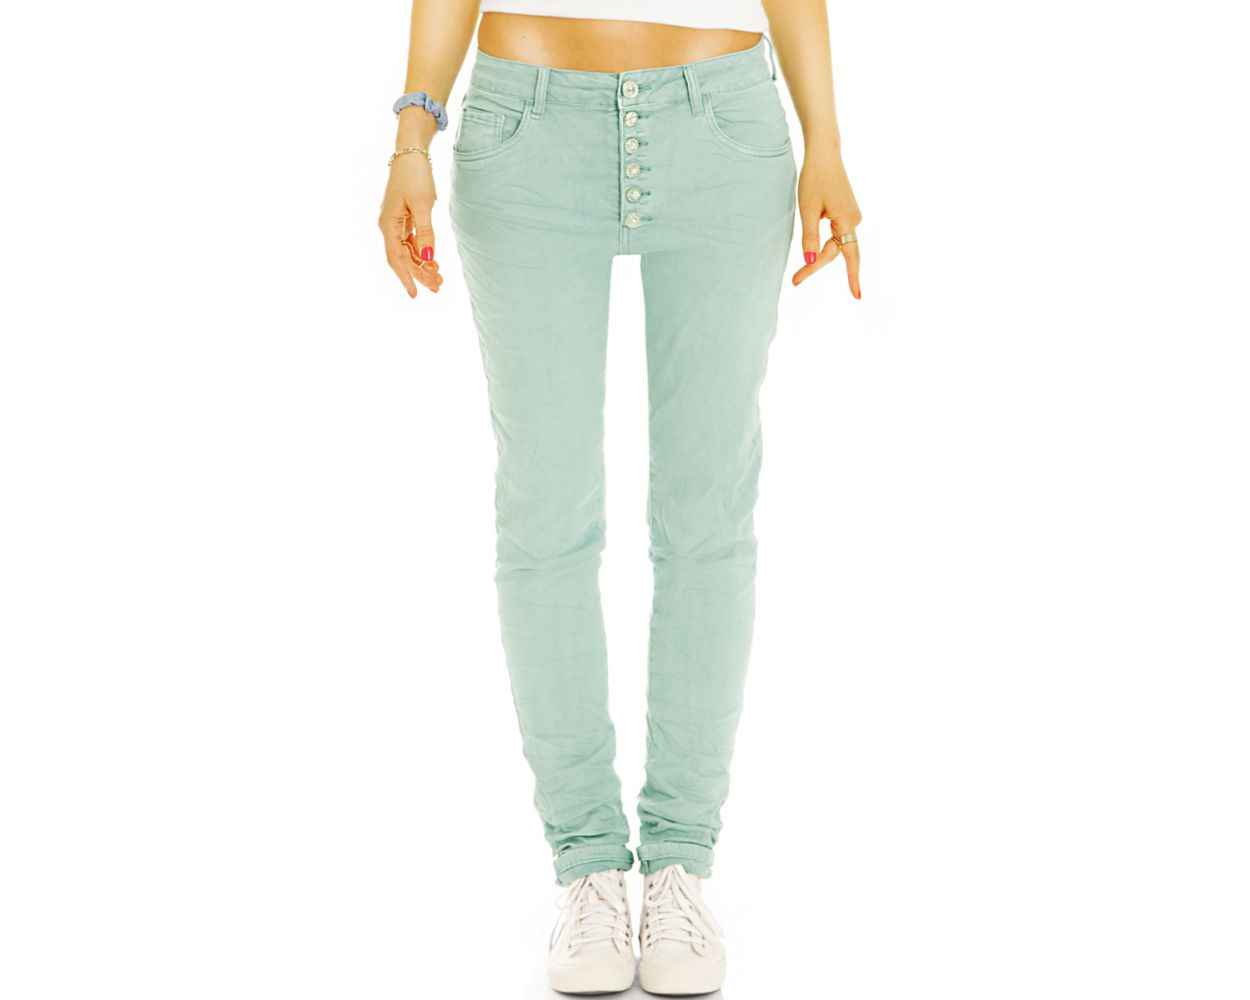 Damen - Low Regular - - j43p Waist - Tappered mit BE Hose Medium Stretch STYLED Knopfleiste Slim Fit - Bequeme Jeans